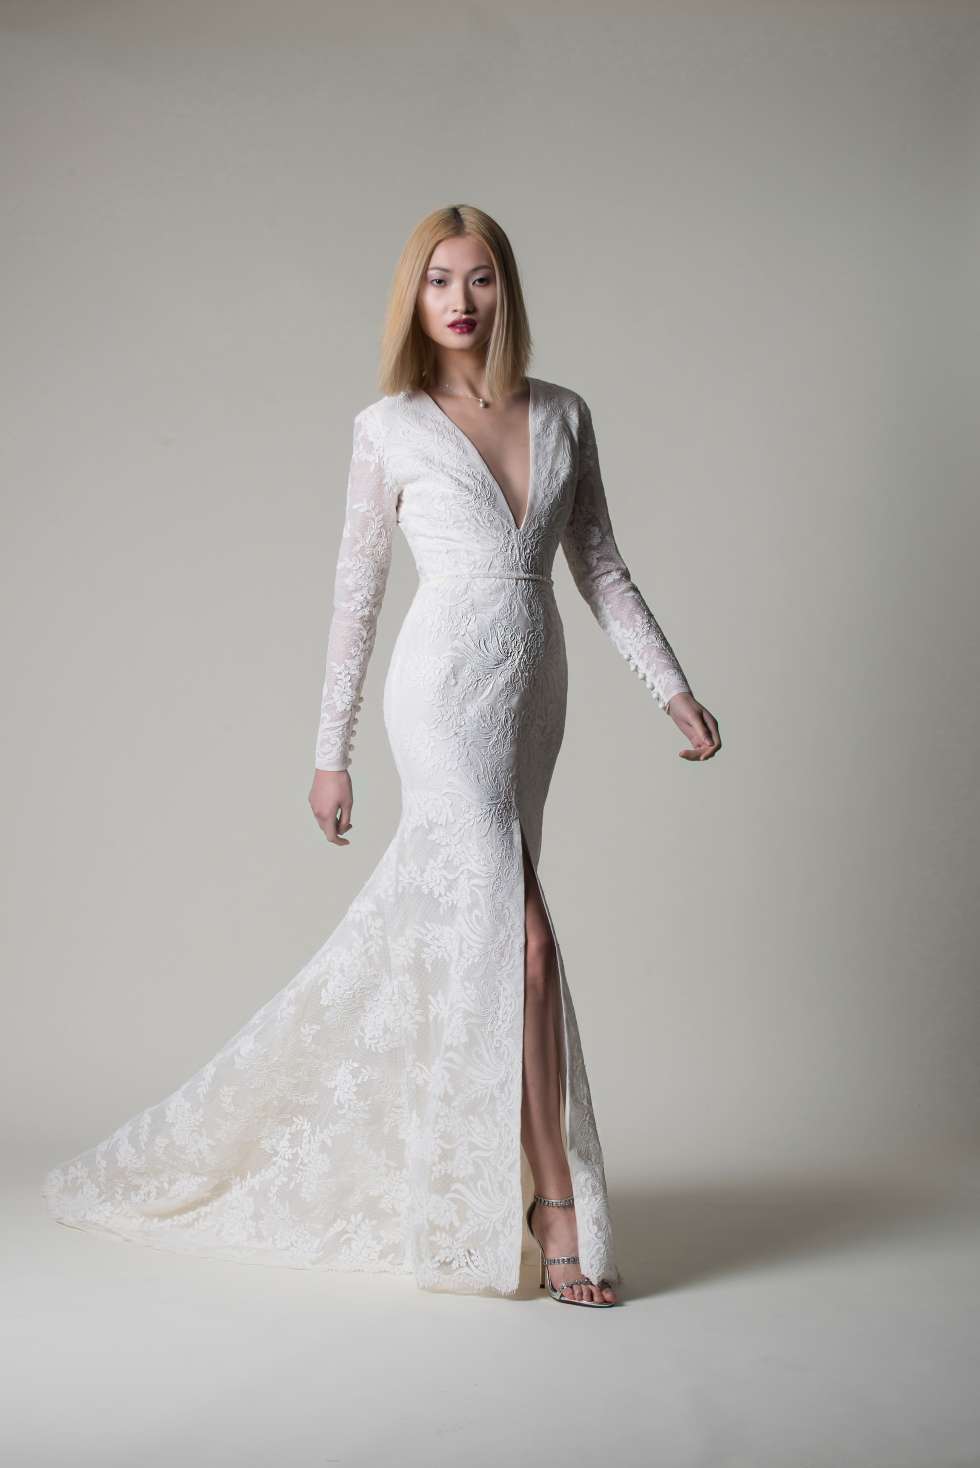 The 2019 Alan Hannah Wedding Dress Collection